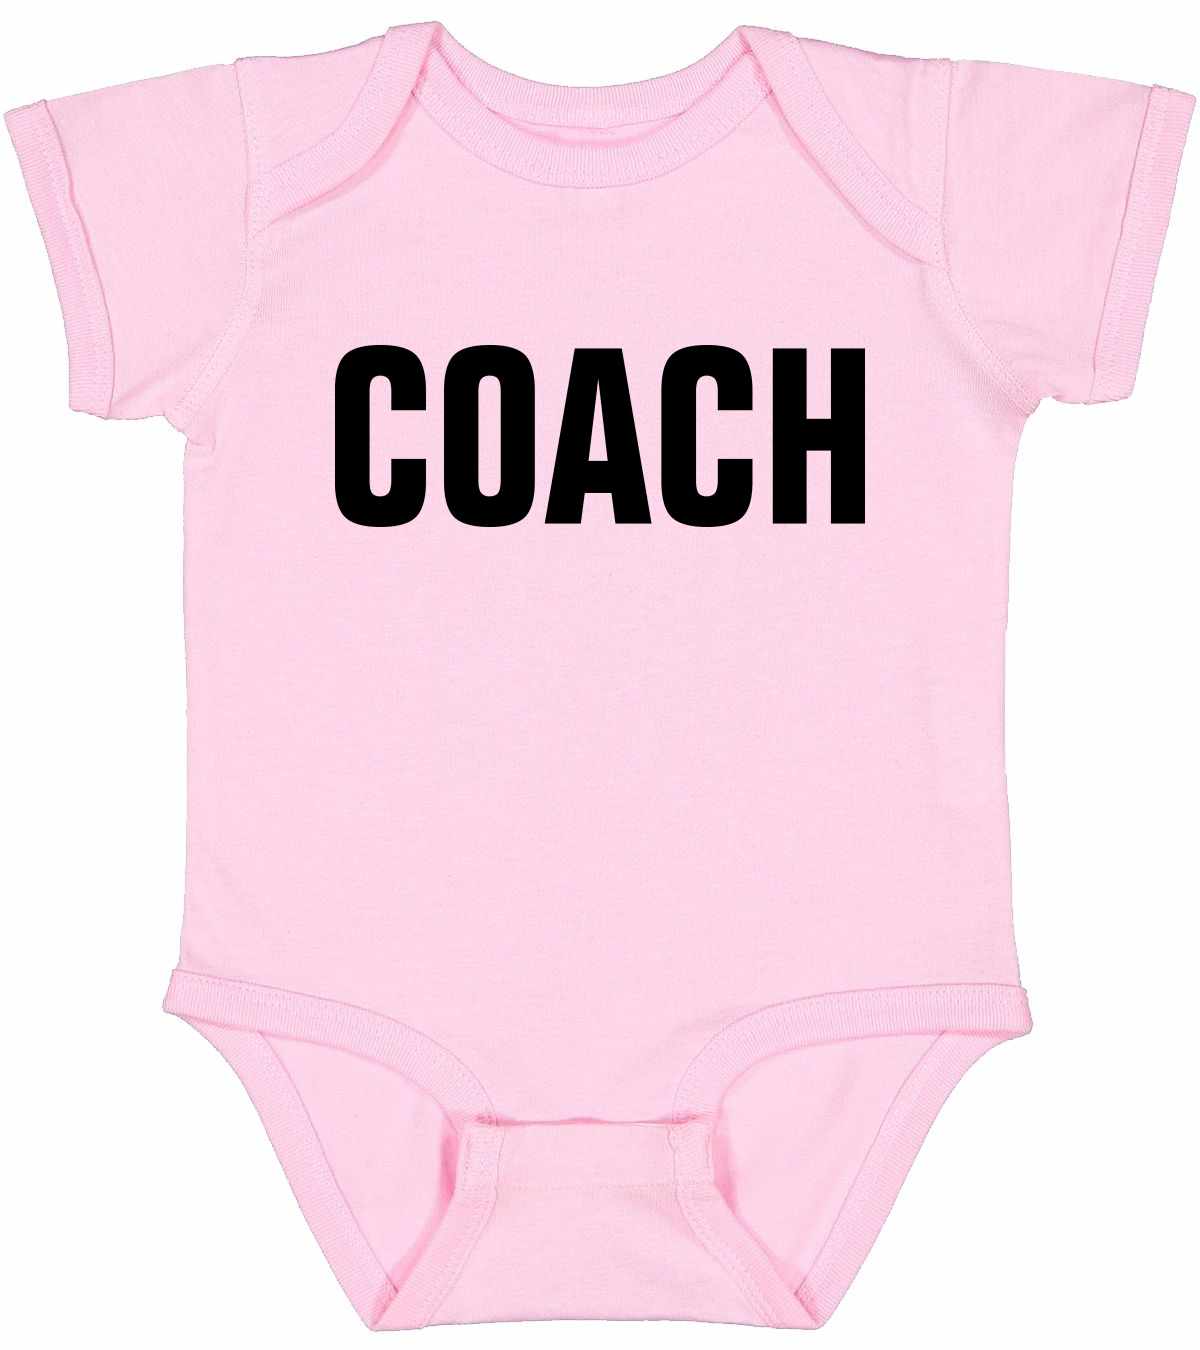 COACH on Infant BodySuit (#406-10)